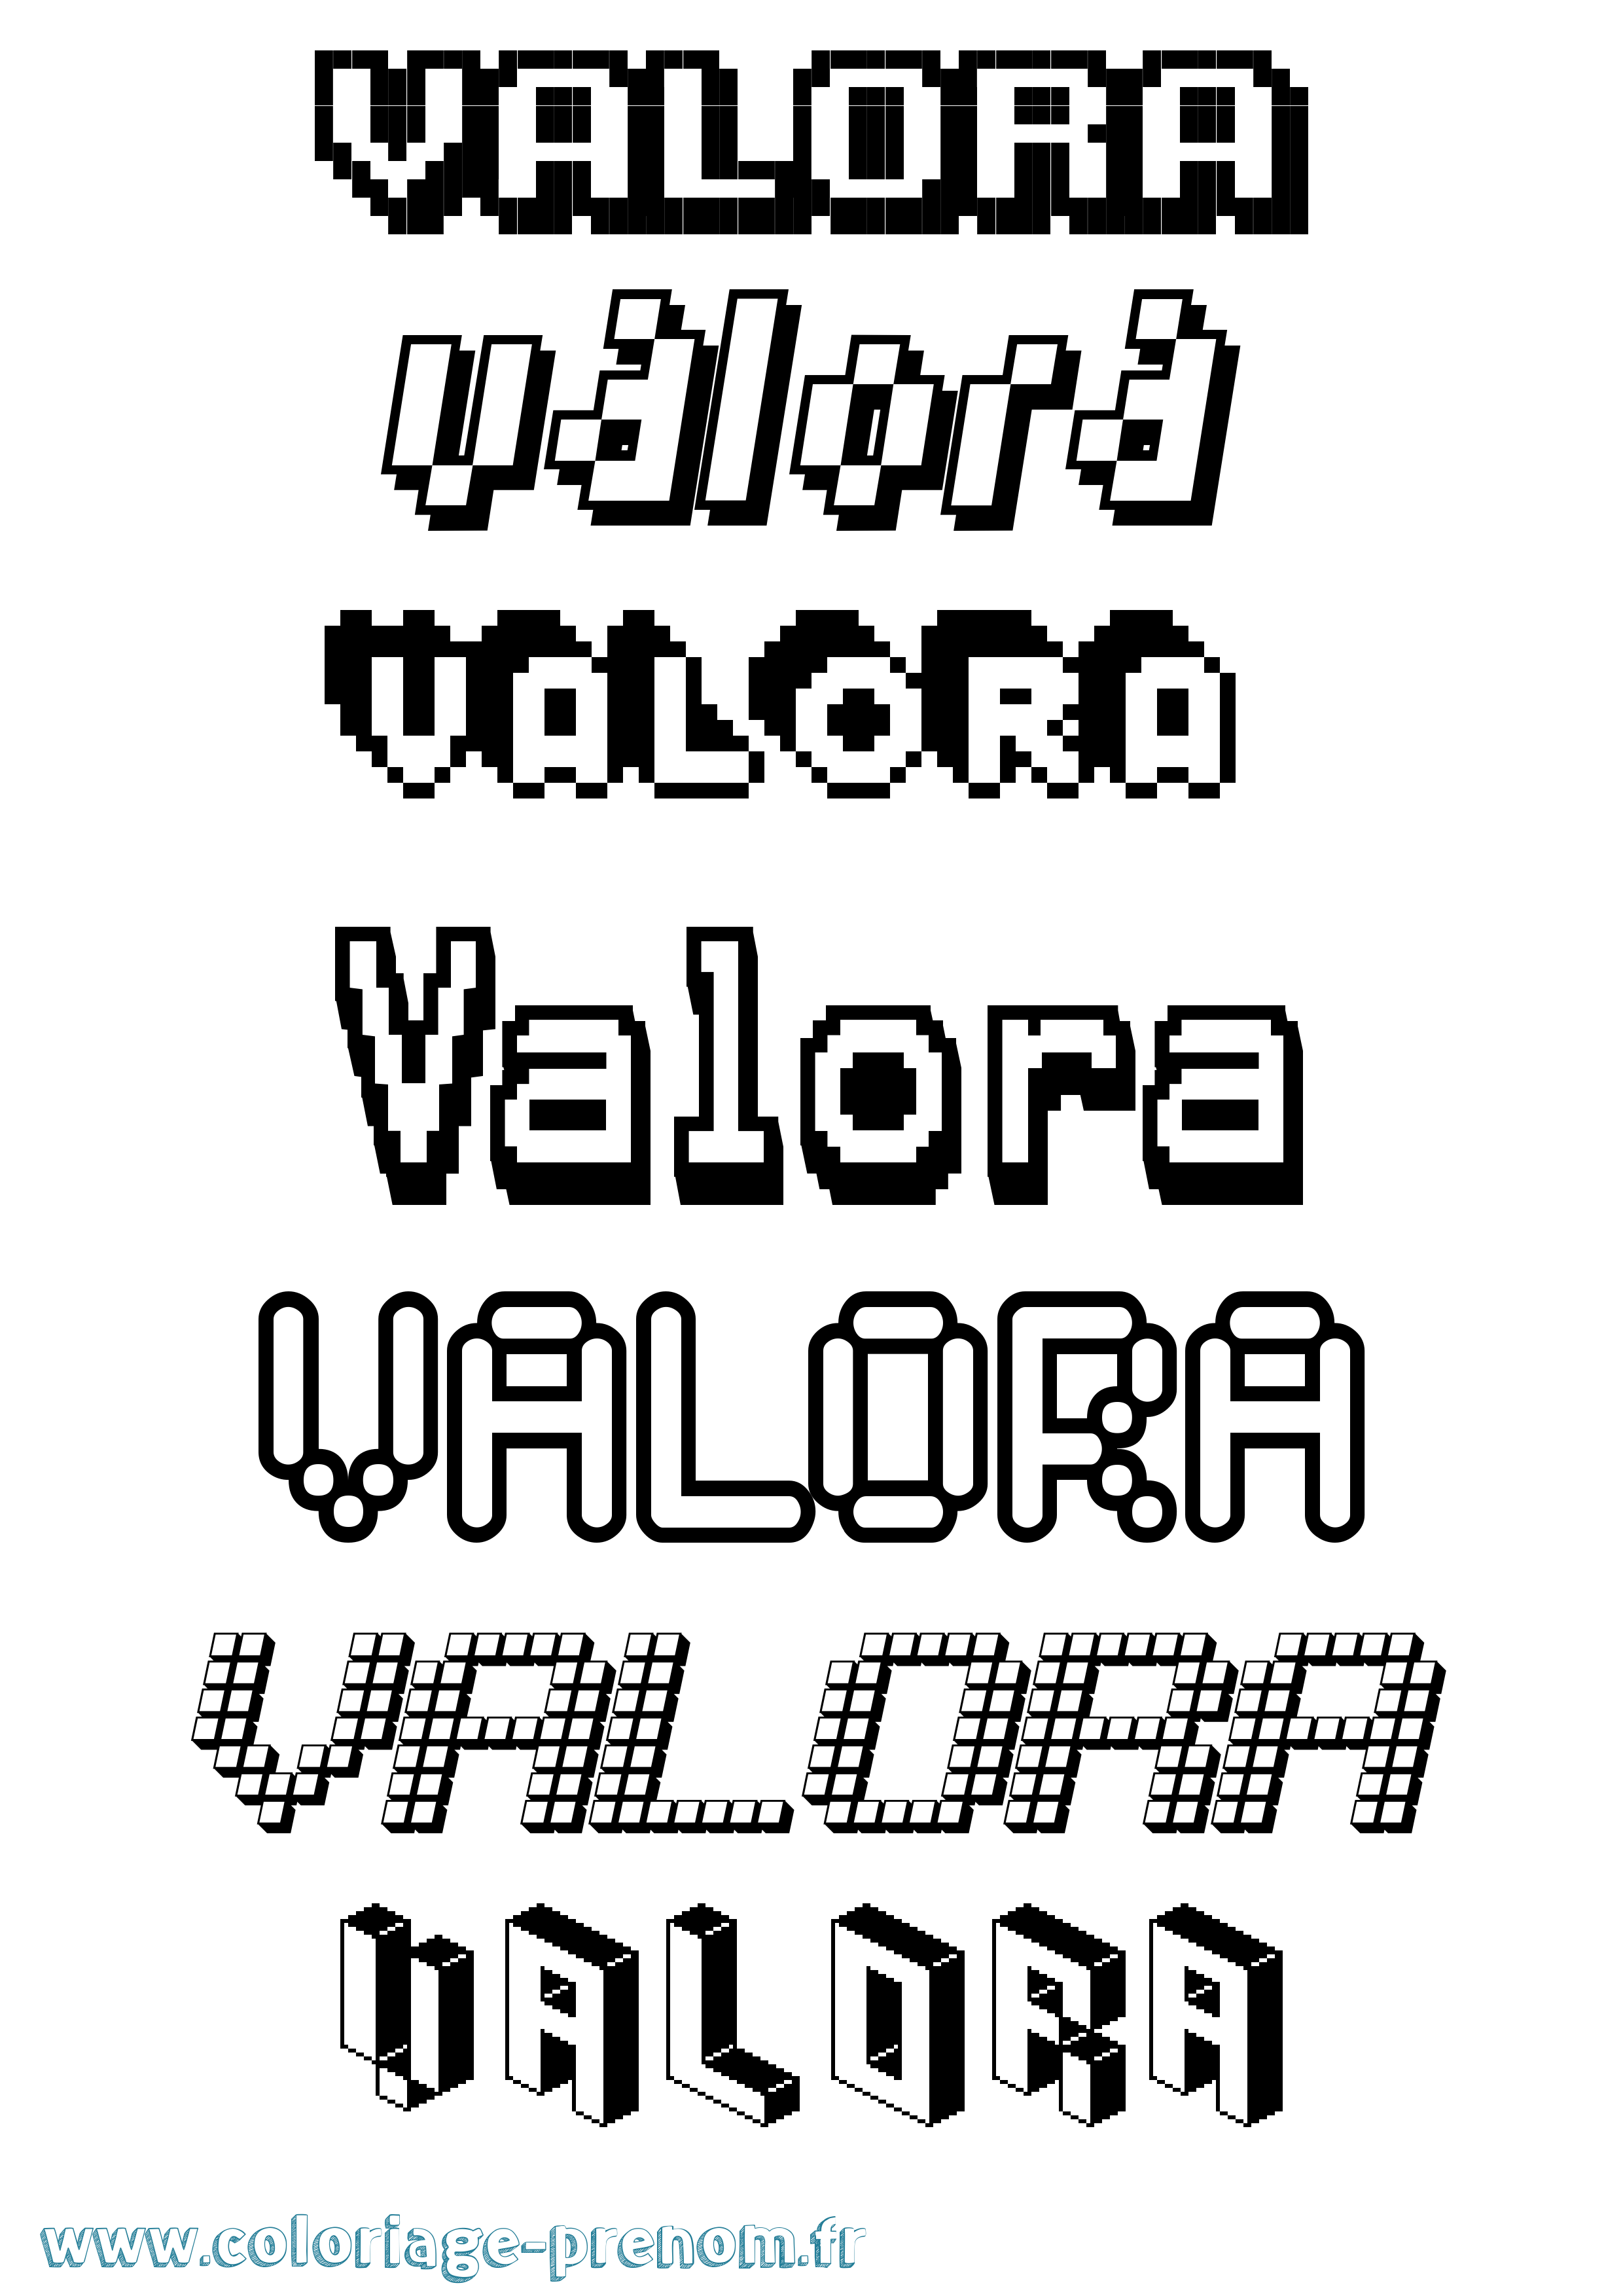 Coloriage prénom Valora Pixel